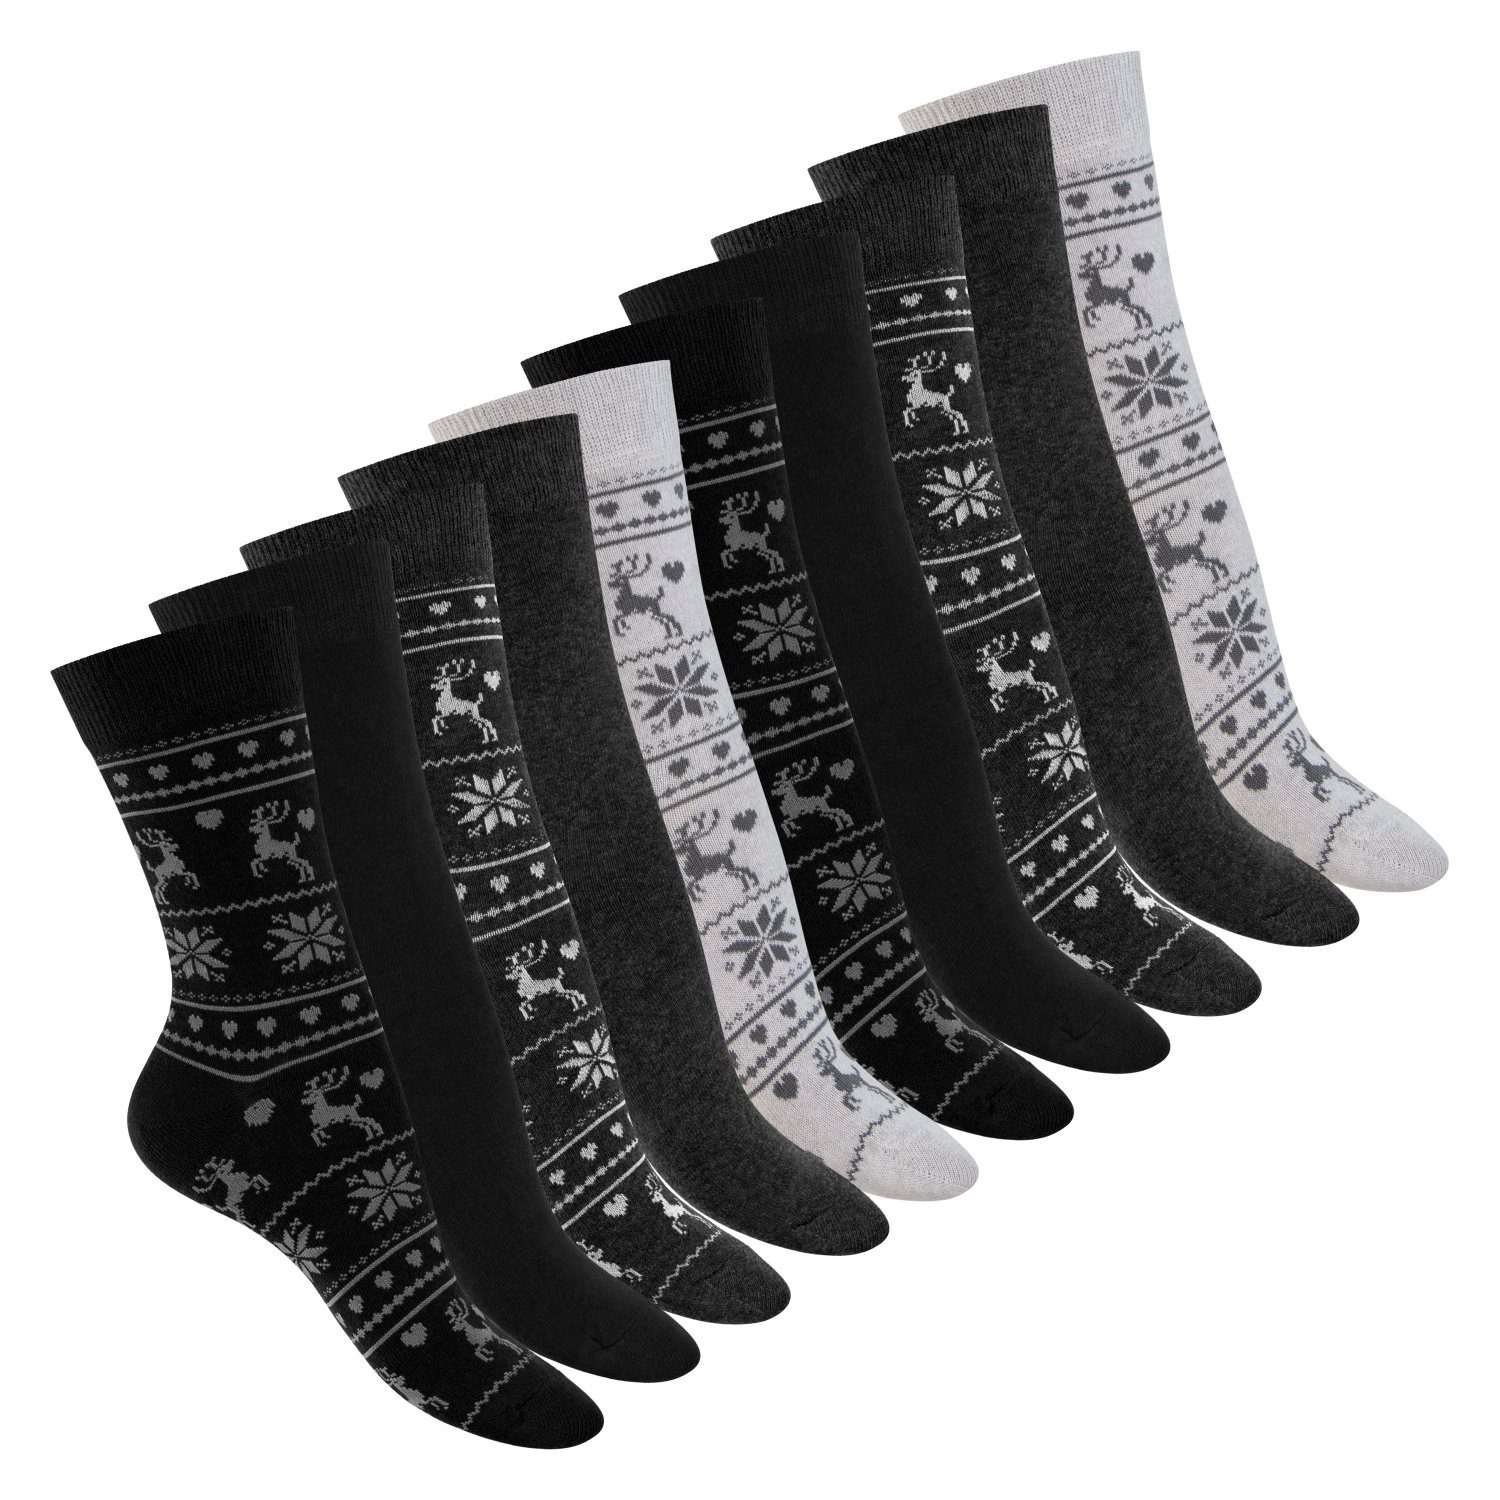 Basicsocken Mix Motiv Black mit Eco Socken celodoro (10 Süße Paar), regenerative Damen Baumwolle